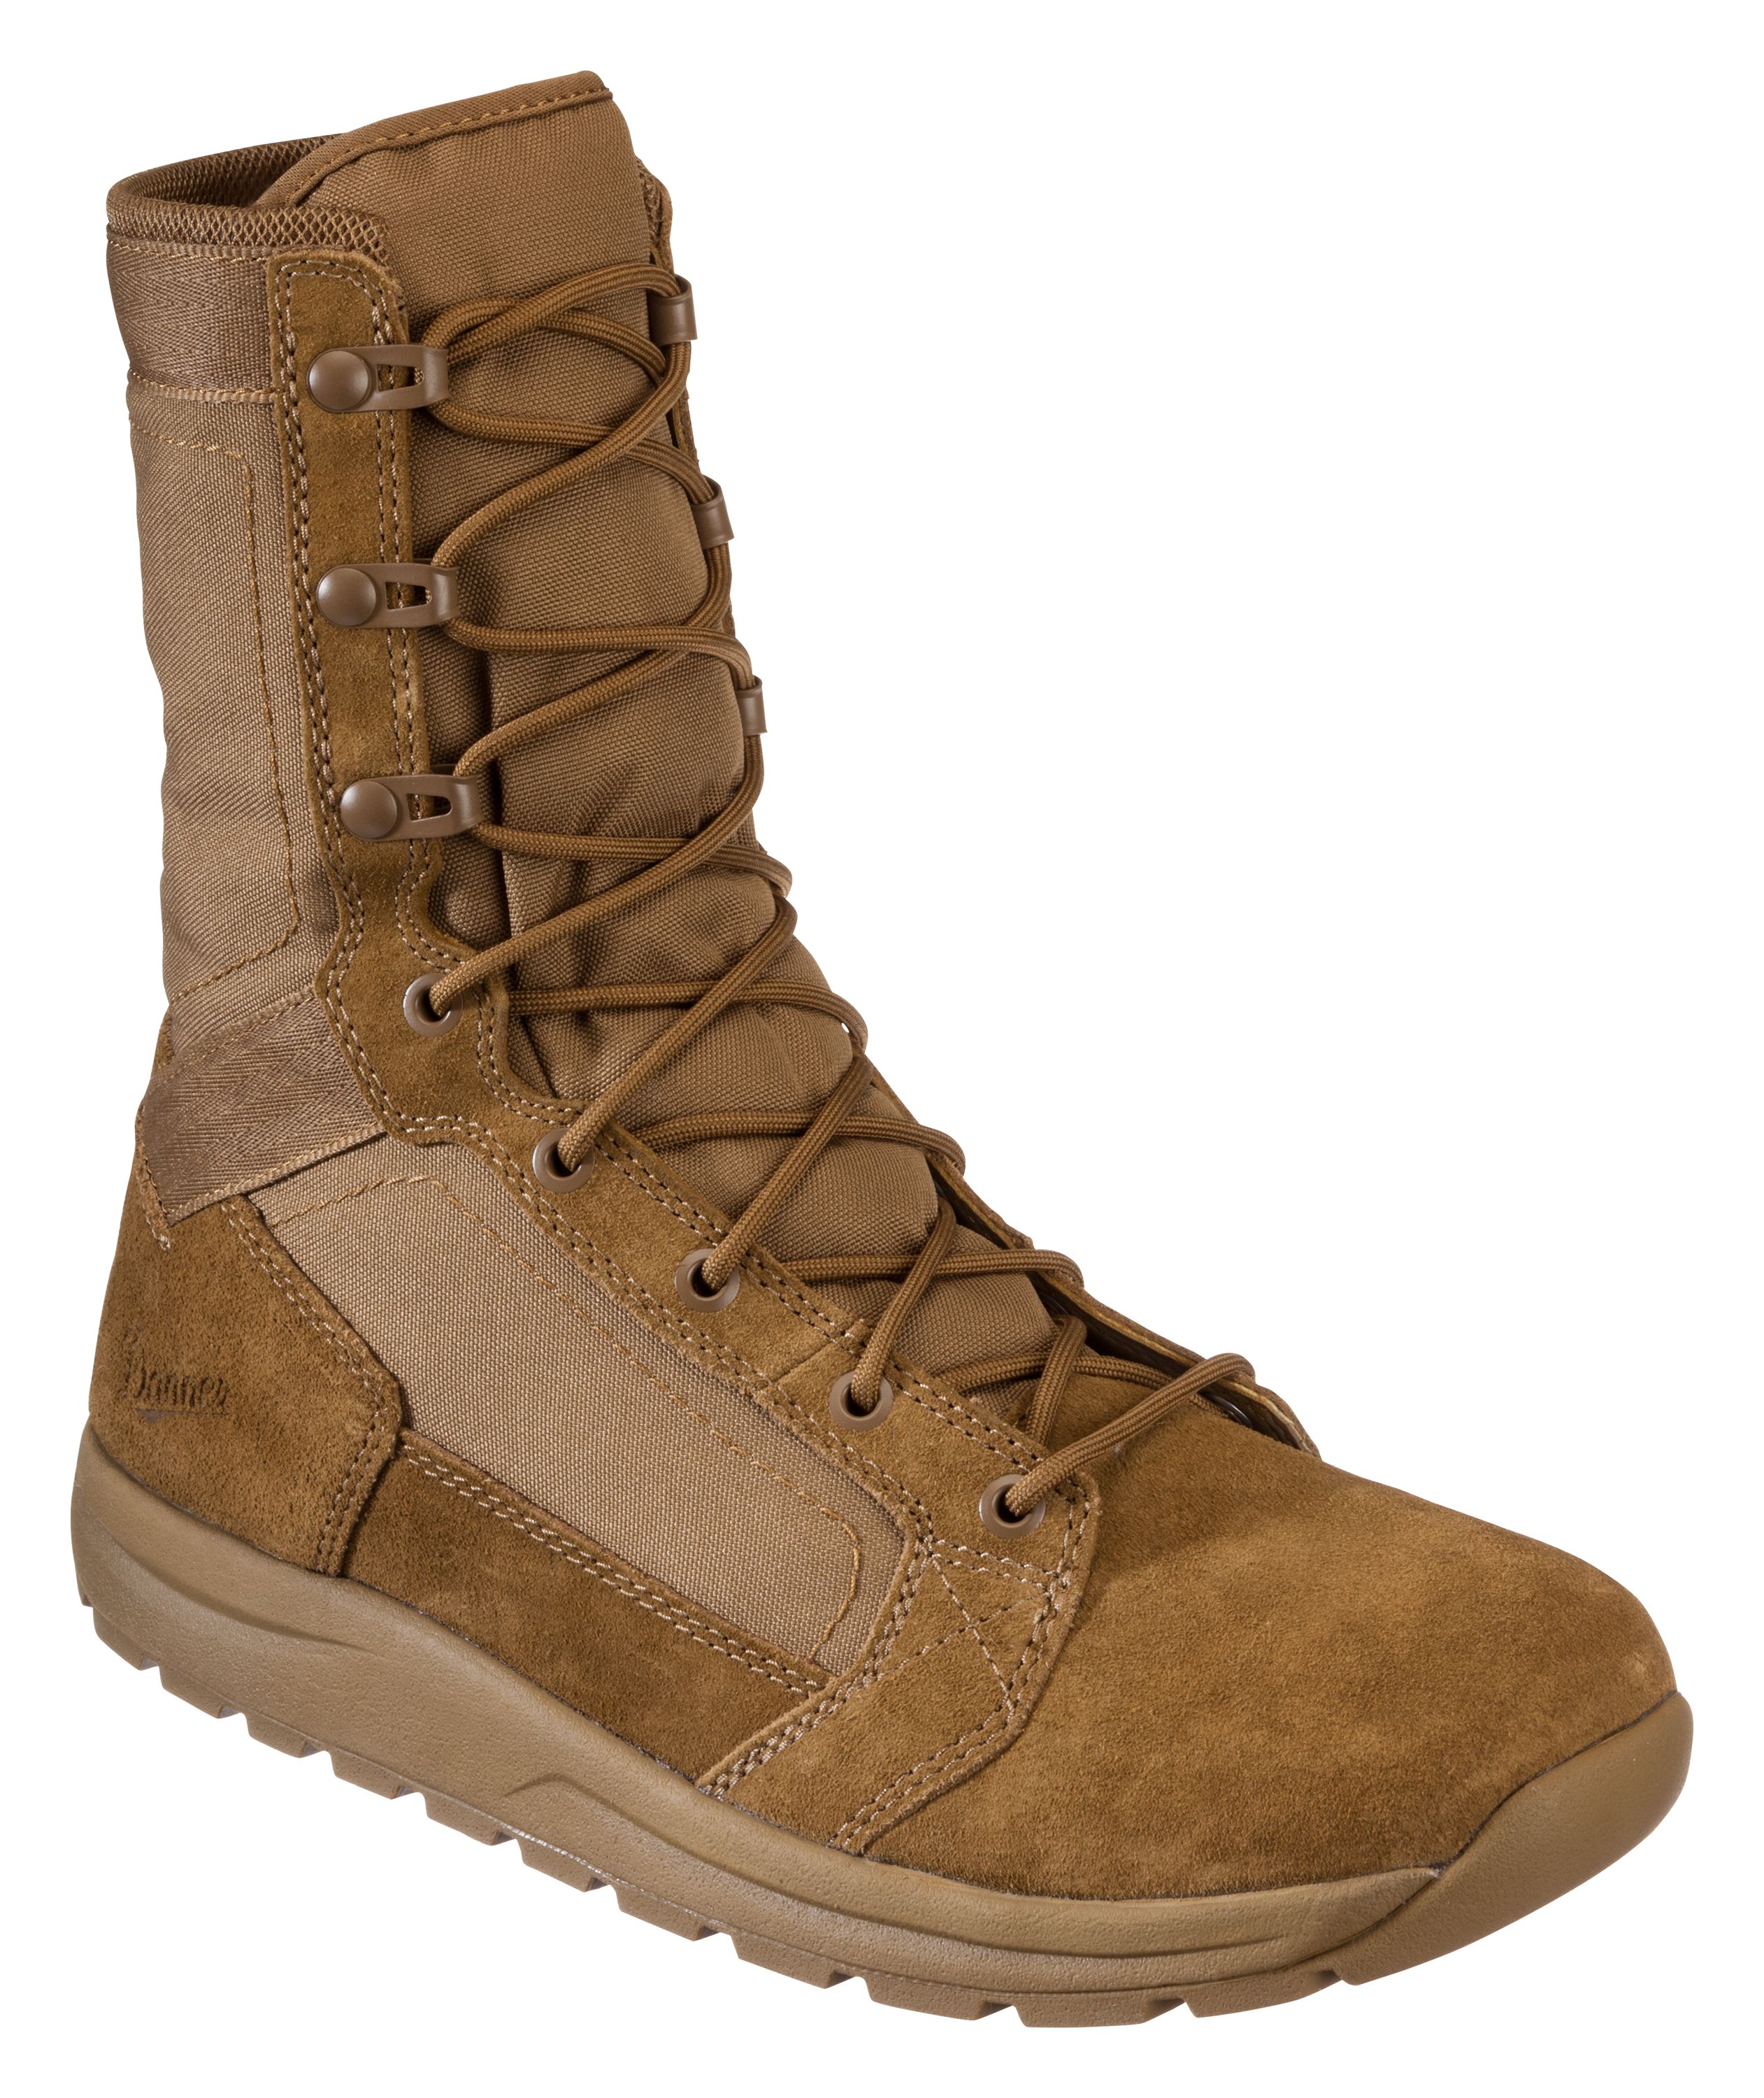 Danner Tachyon Tactical Boots for Men - Coyote - 13W